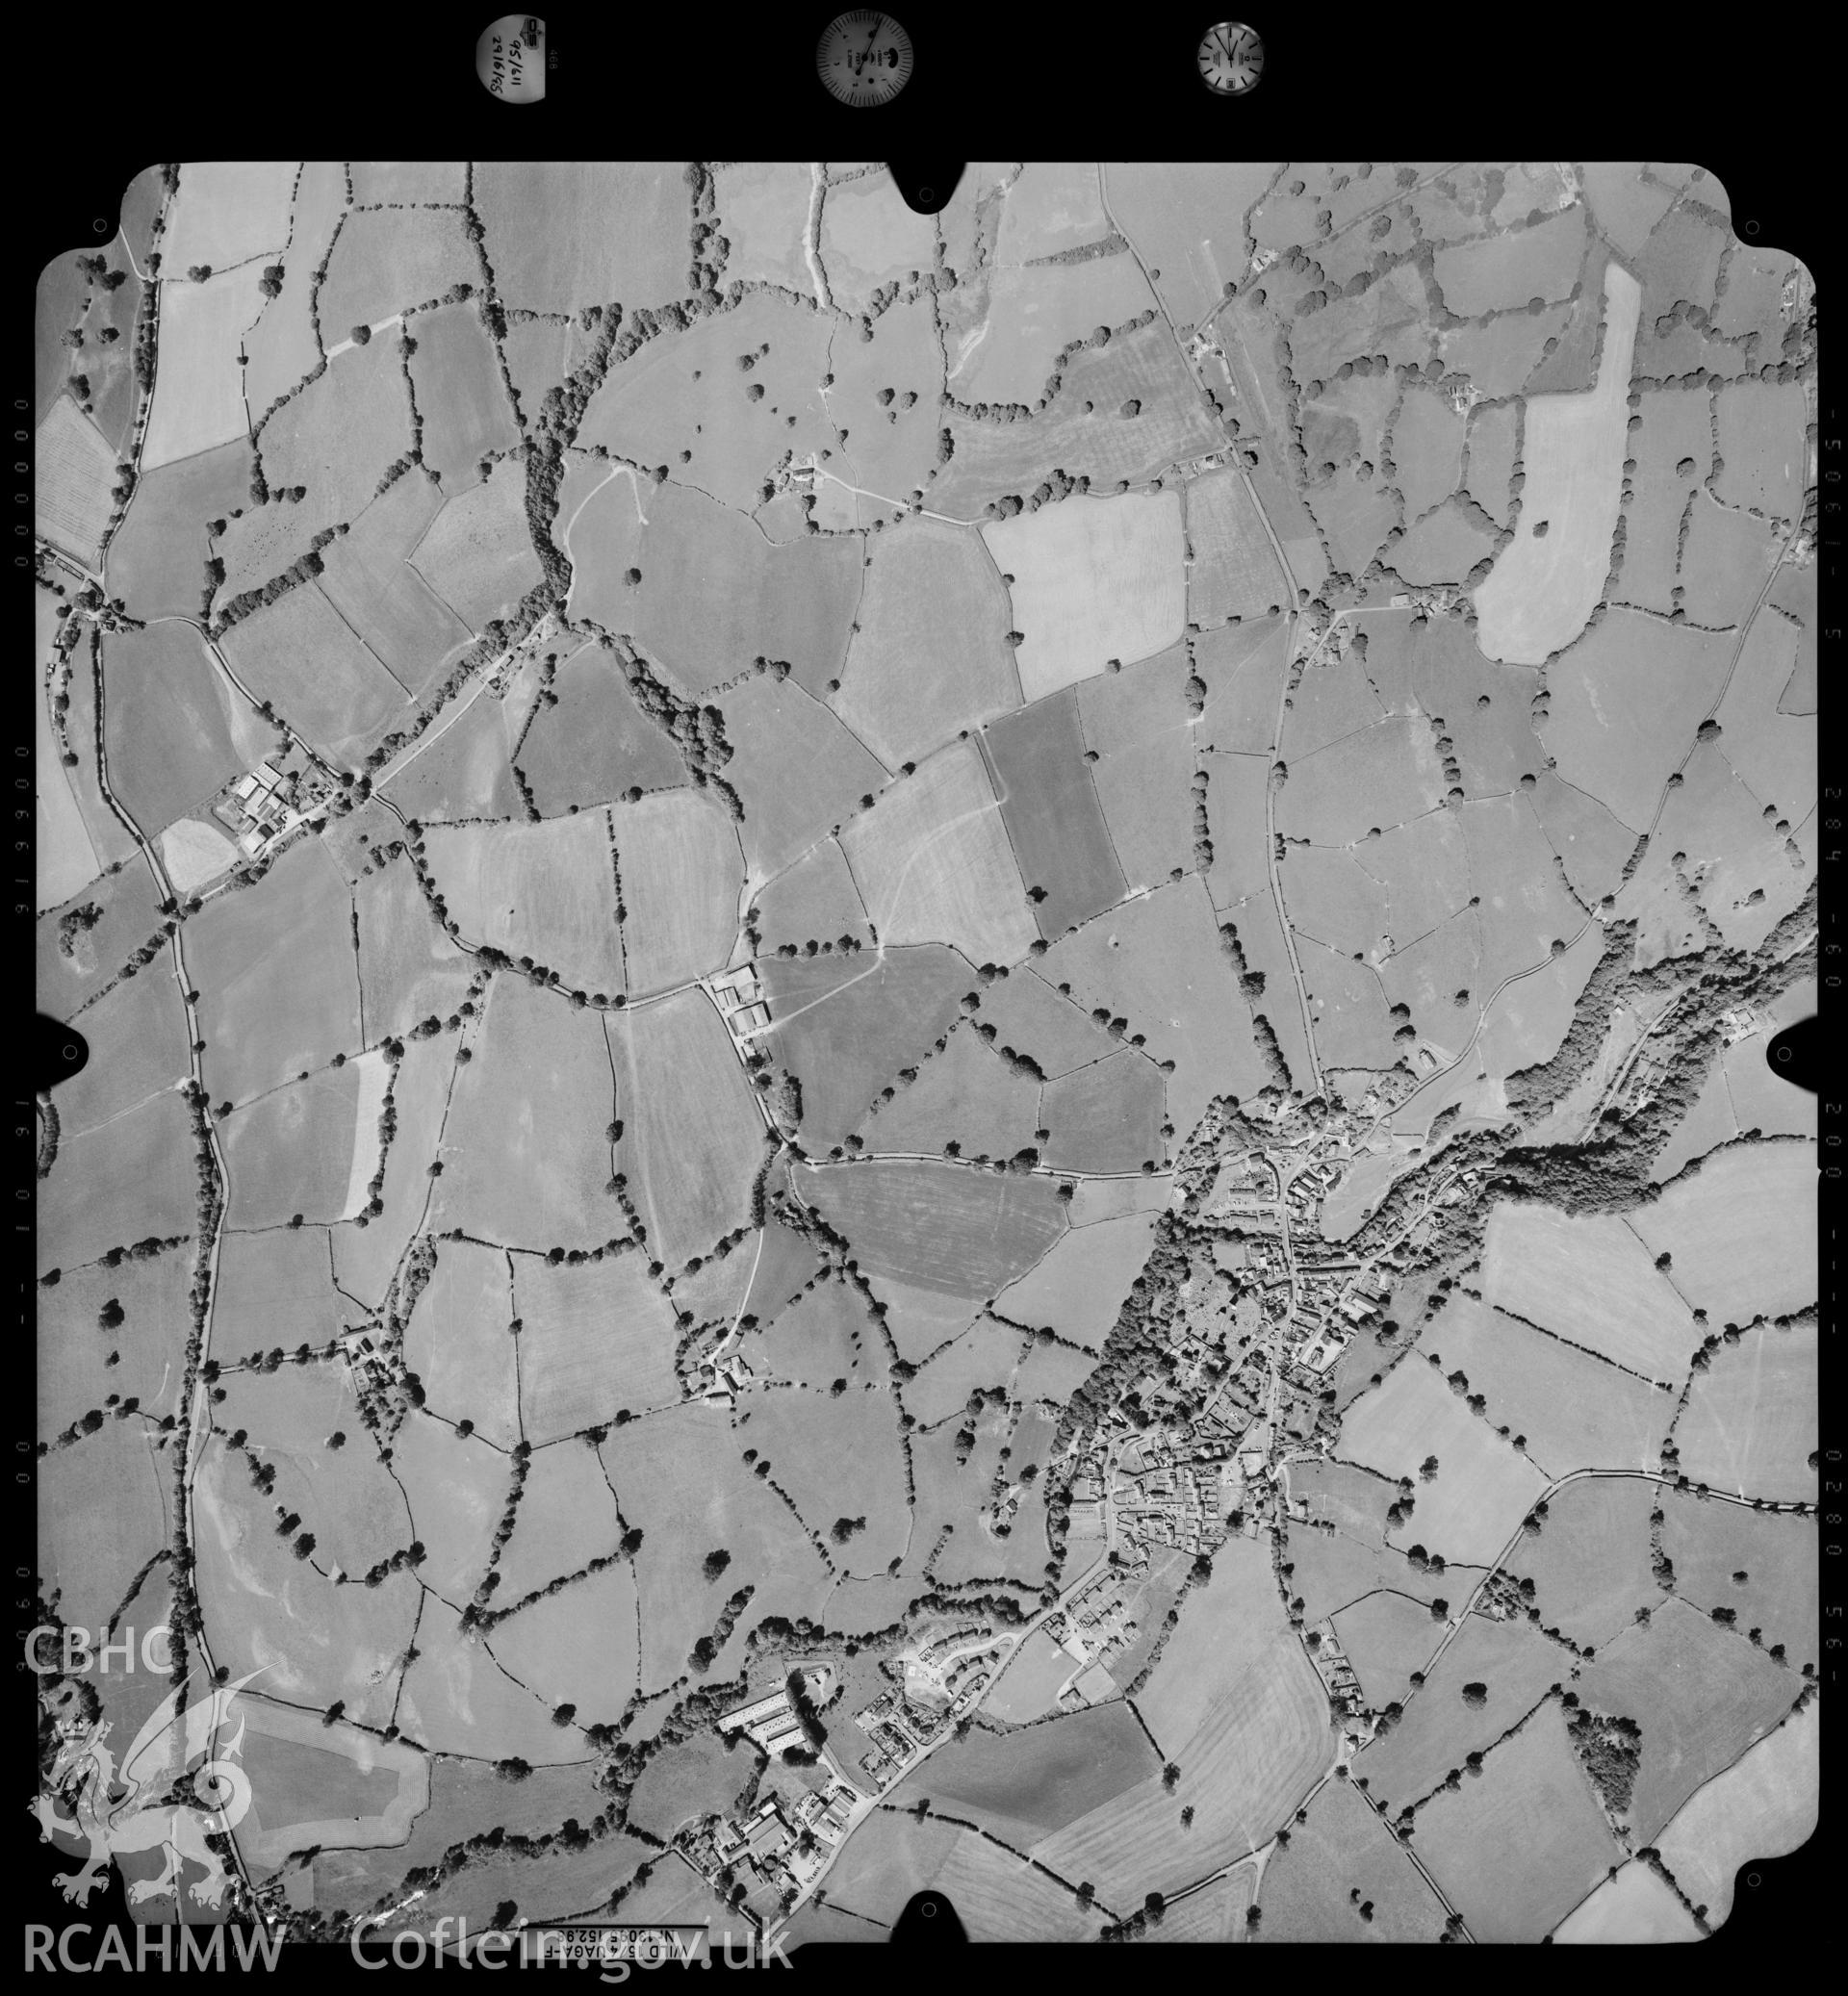 Digitized copy of an aerial photograph showing Llanrhaiadr ym Mochnant area, taken by Ordnance Survey, 1995.